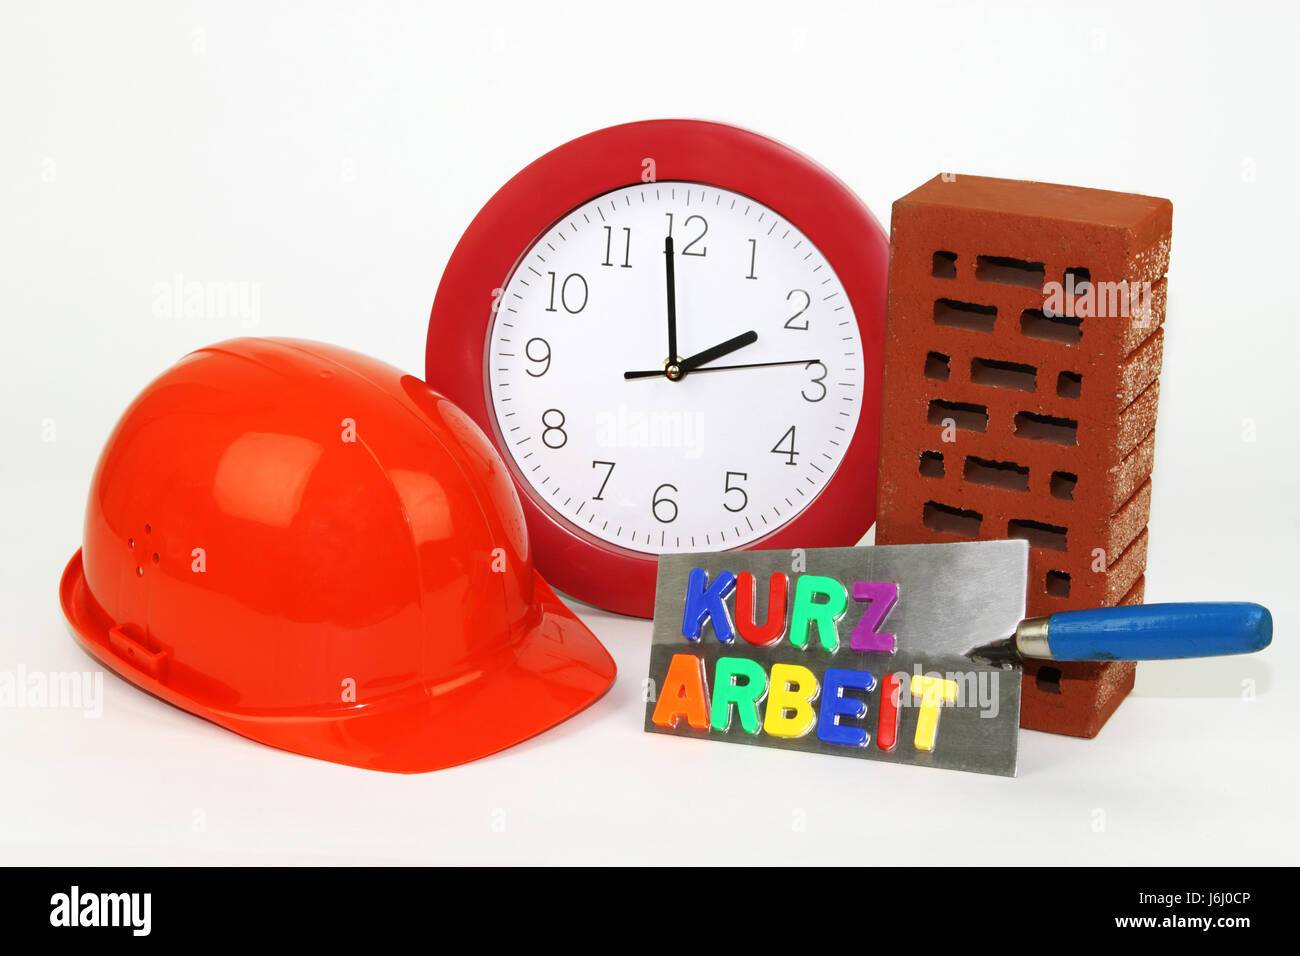 time measurement regulation working time brick trowel short time brick clock Stock Photo